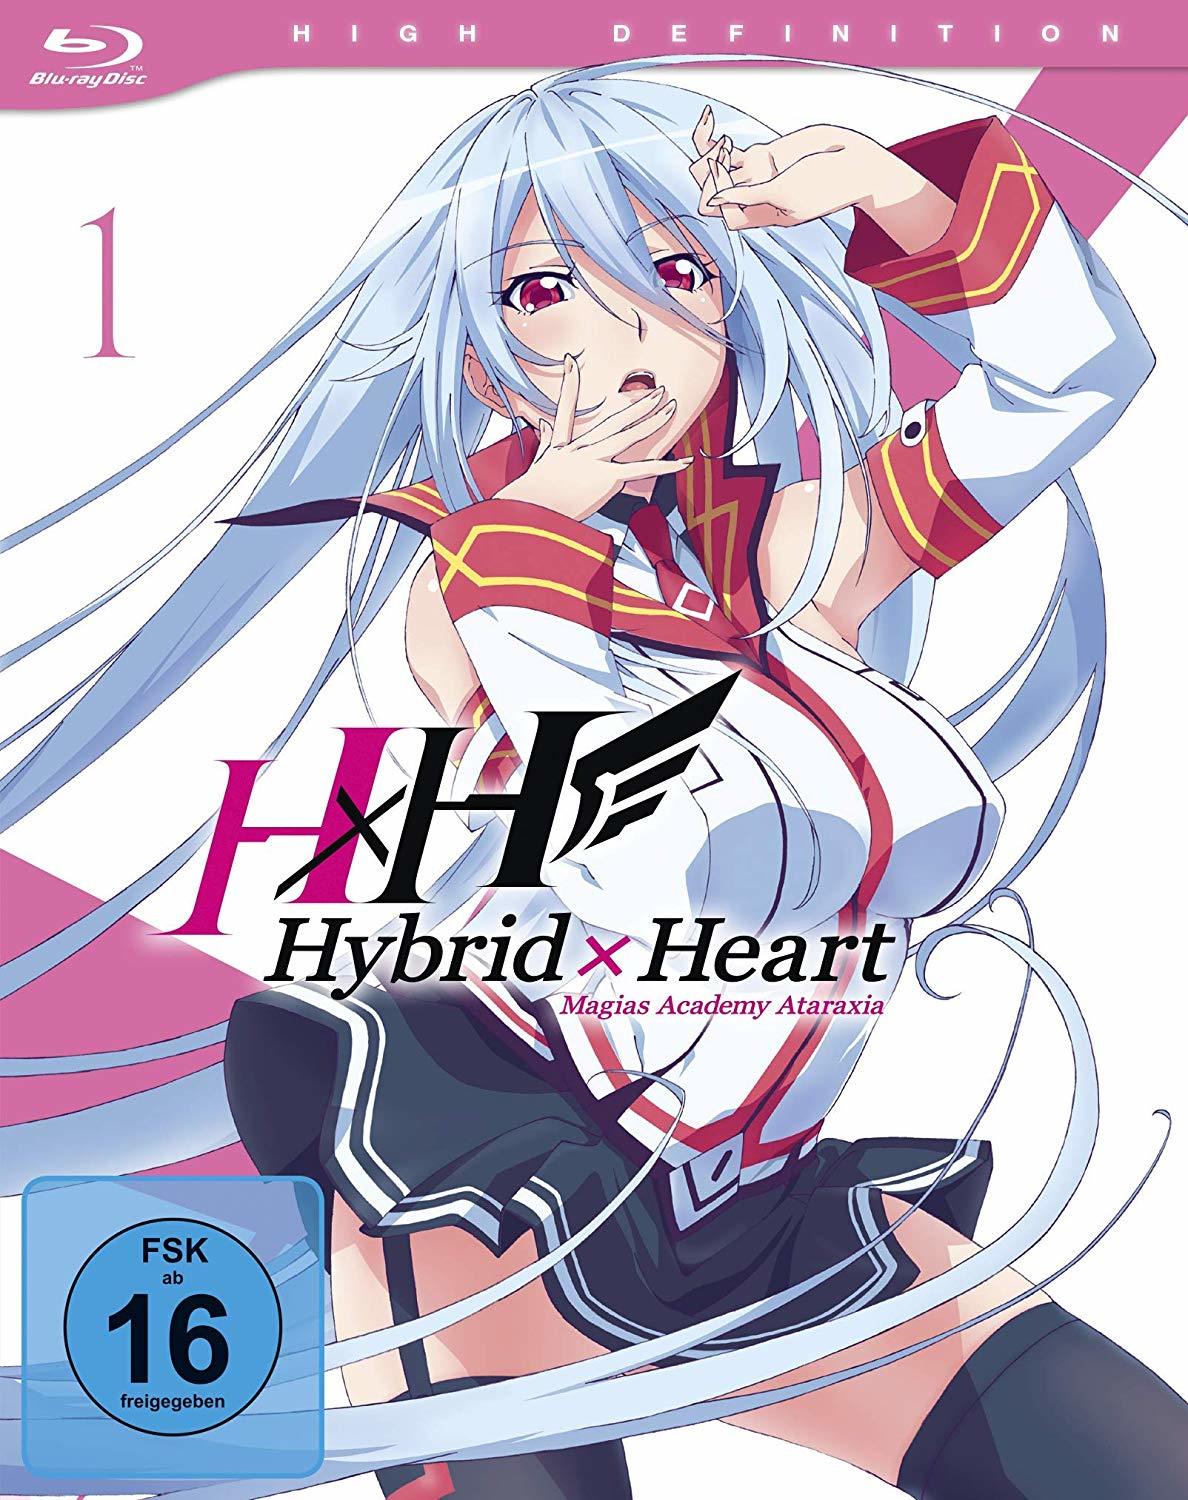 Hybrid x Heart Magias Academy Ataraxia - Novel Updates